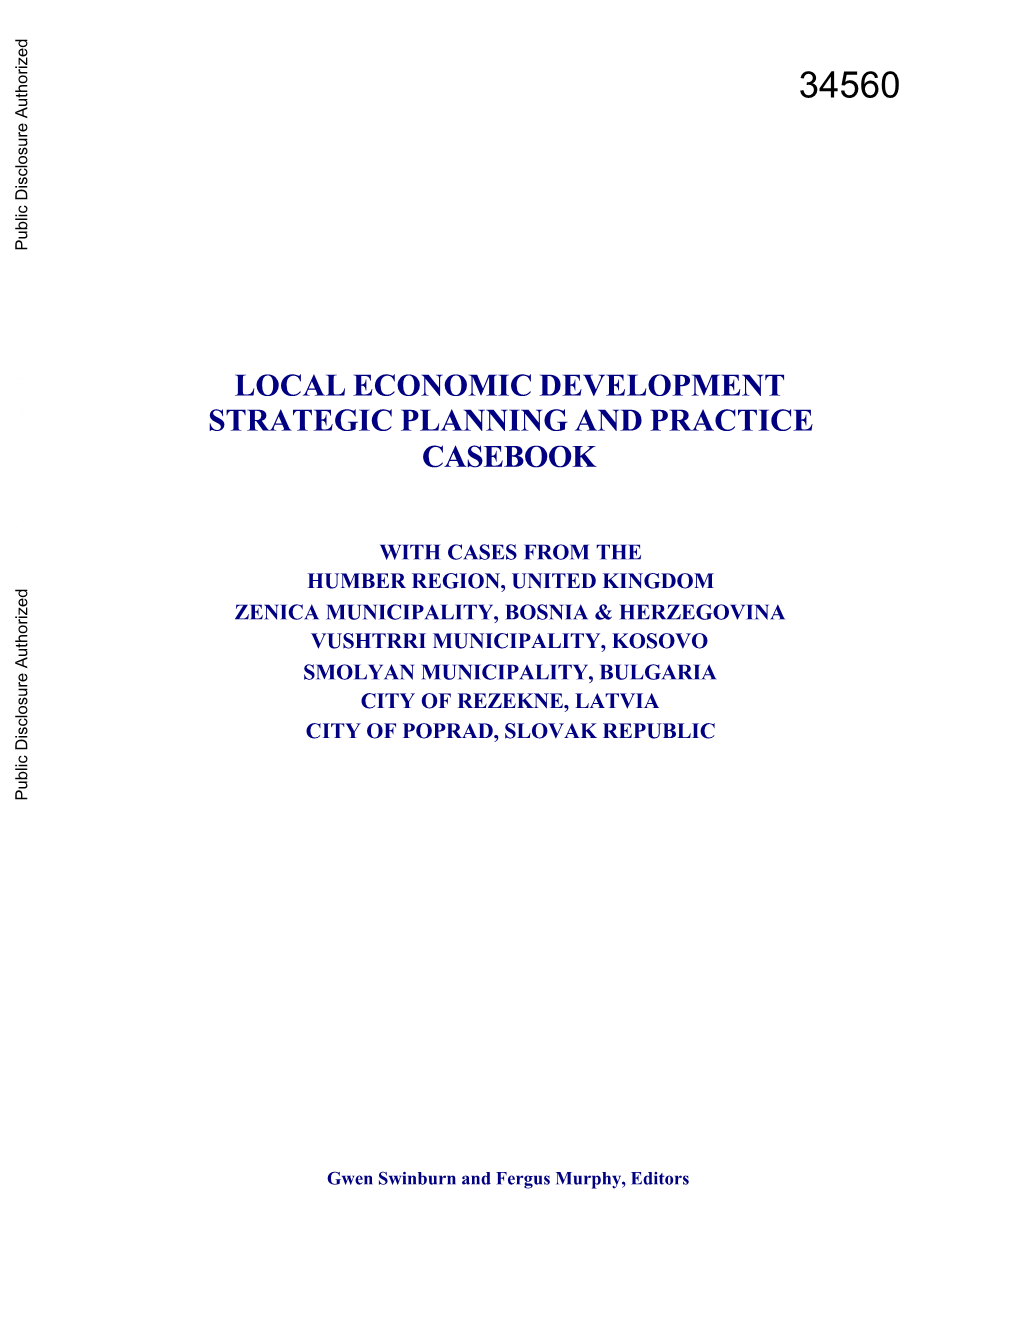 Humber Economic Development Action Plan